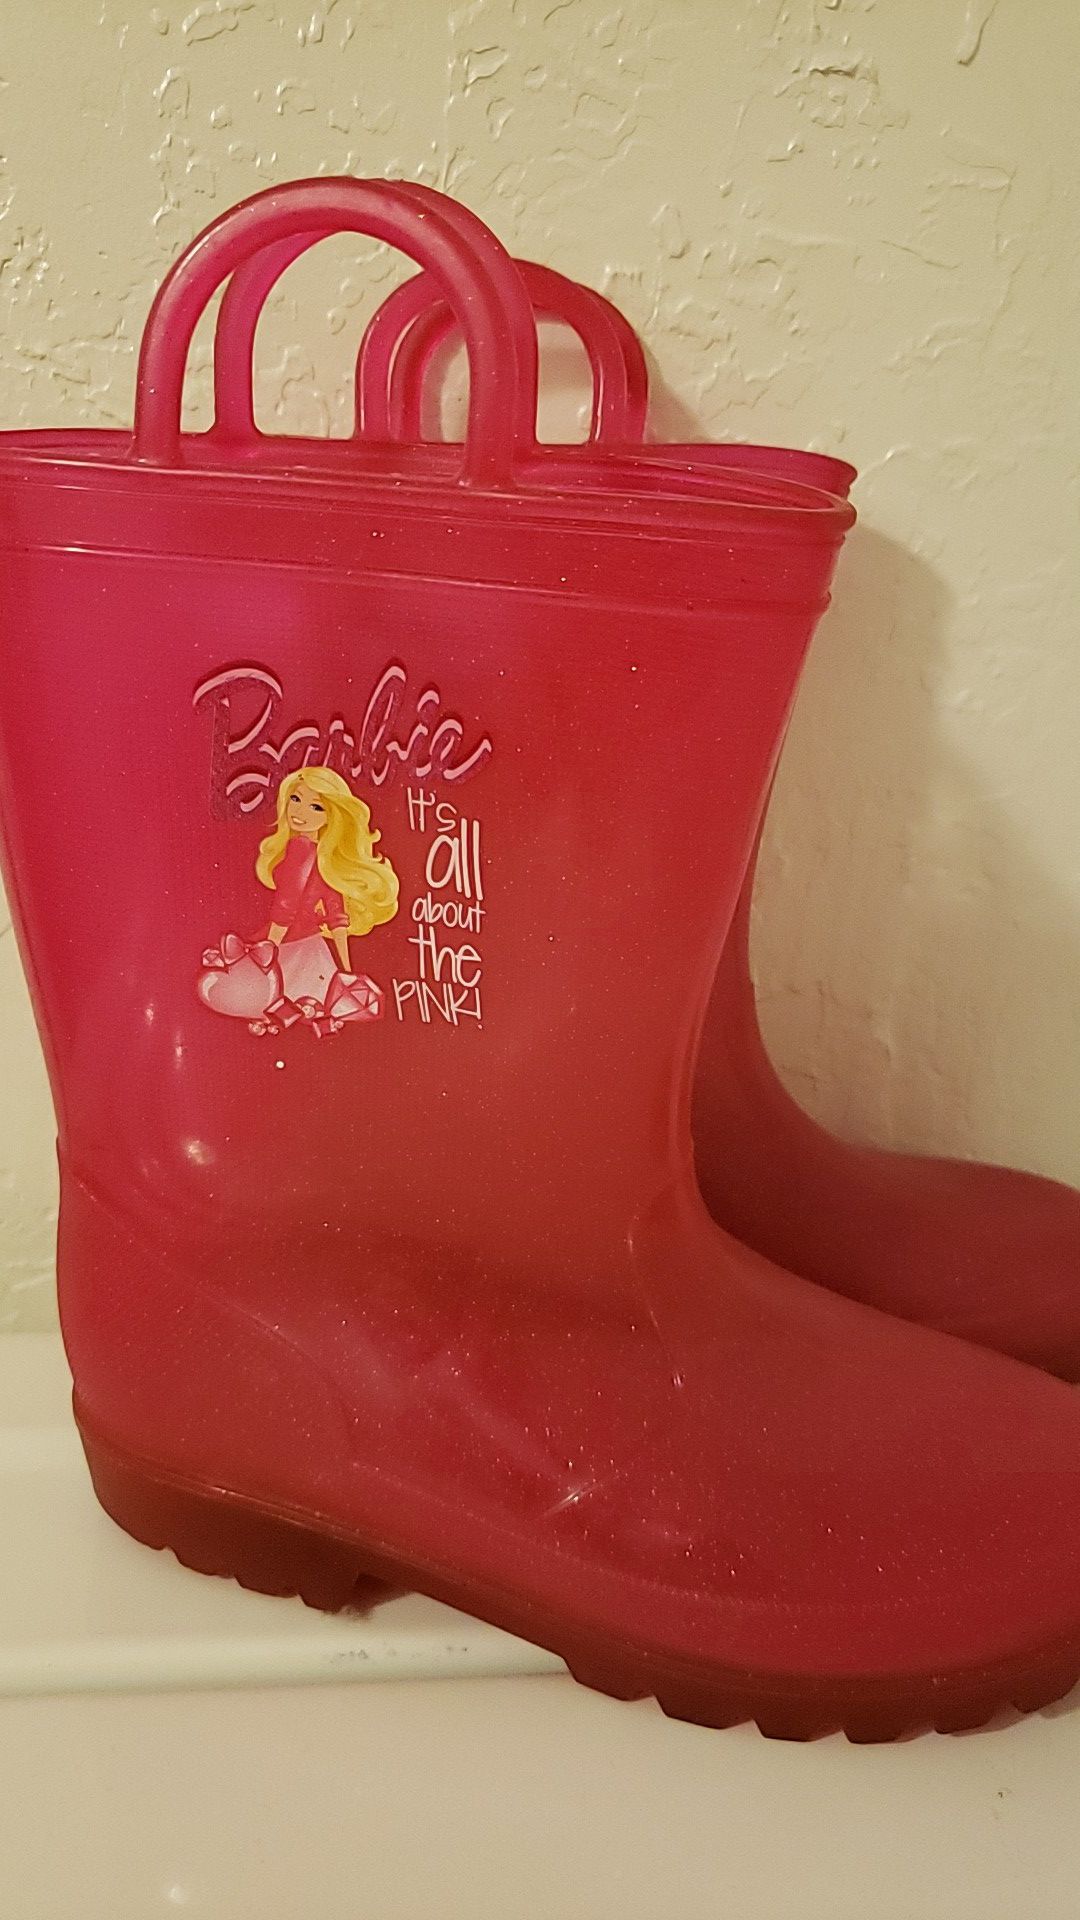 Girl's light up rain boots